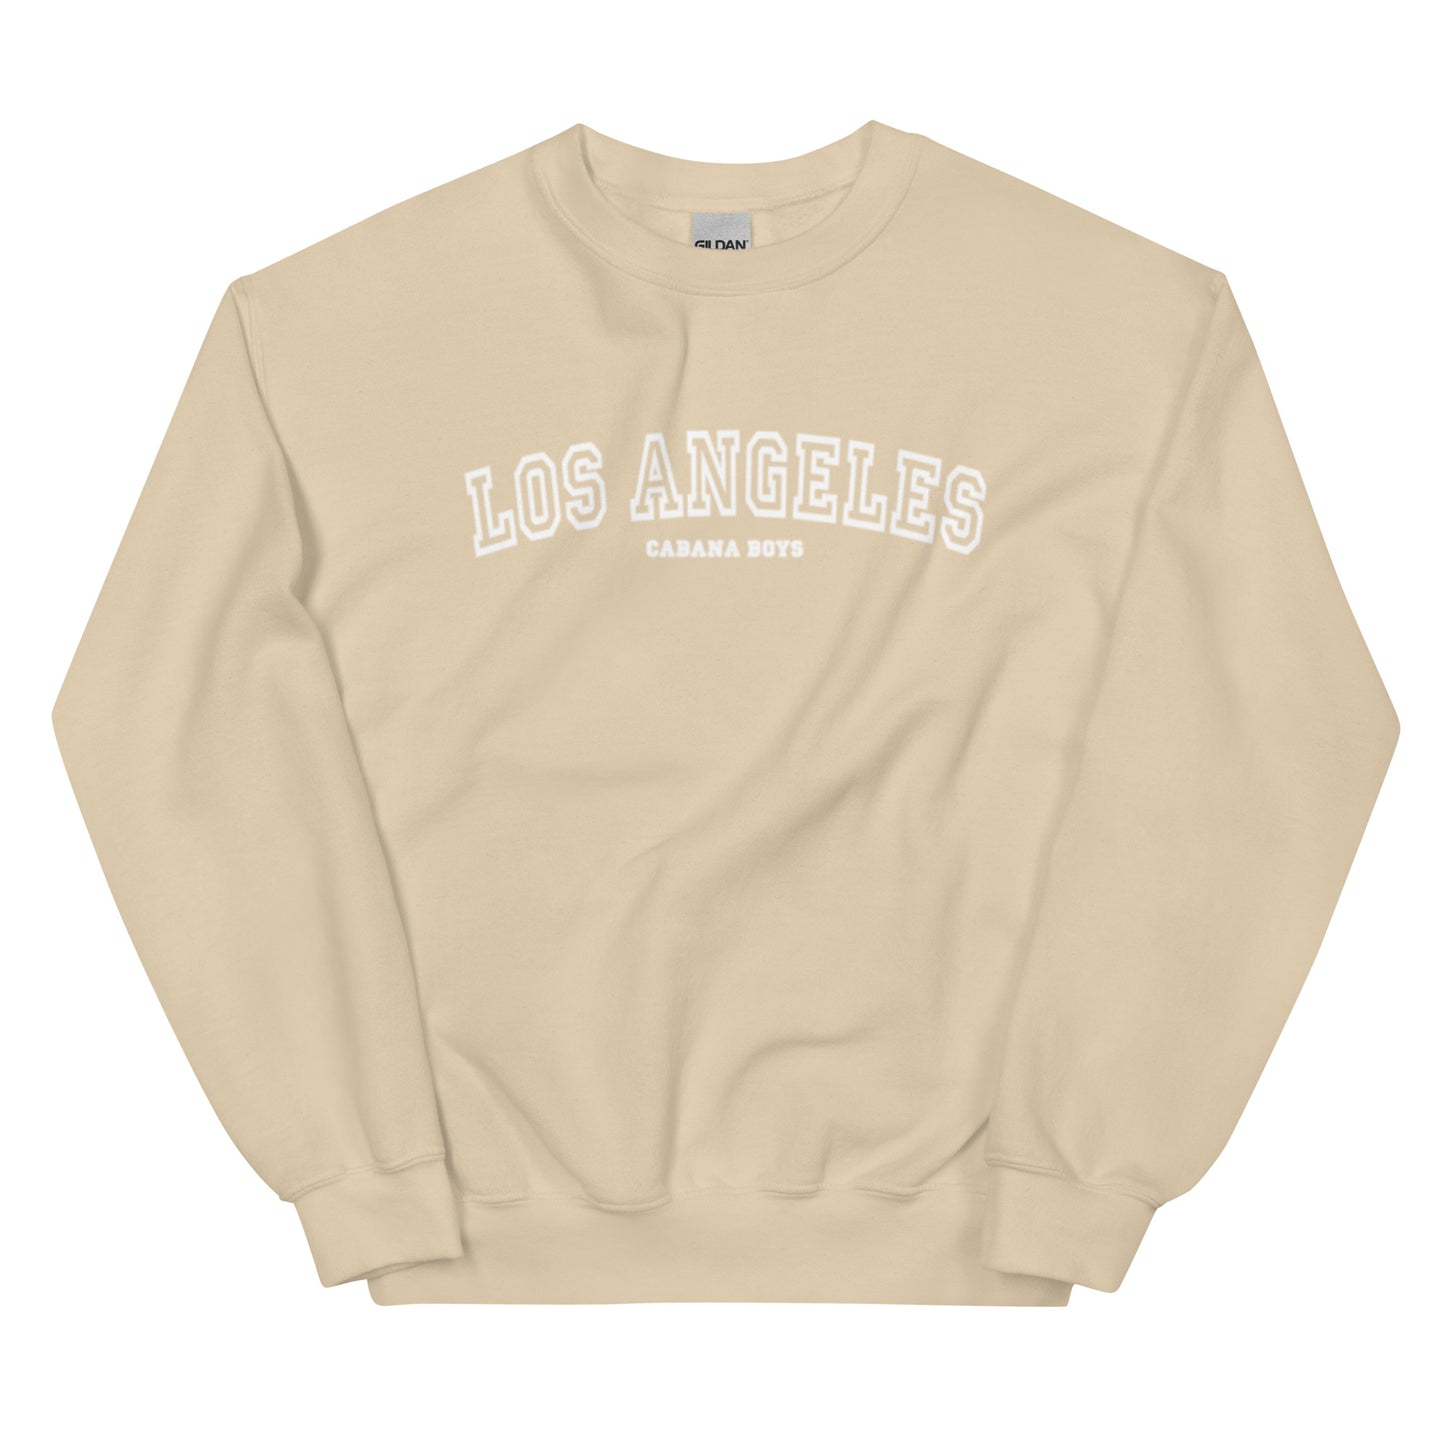 Collegiate Collection Los Angeles Sweatshirt